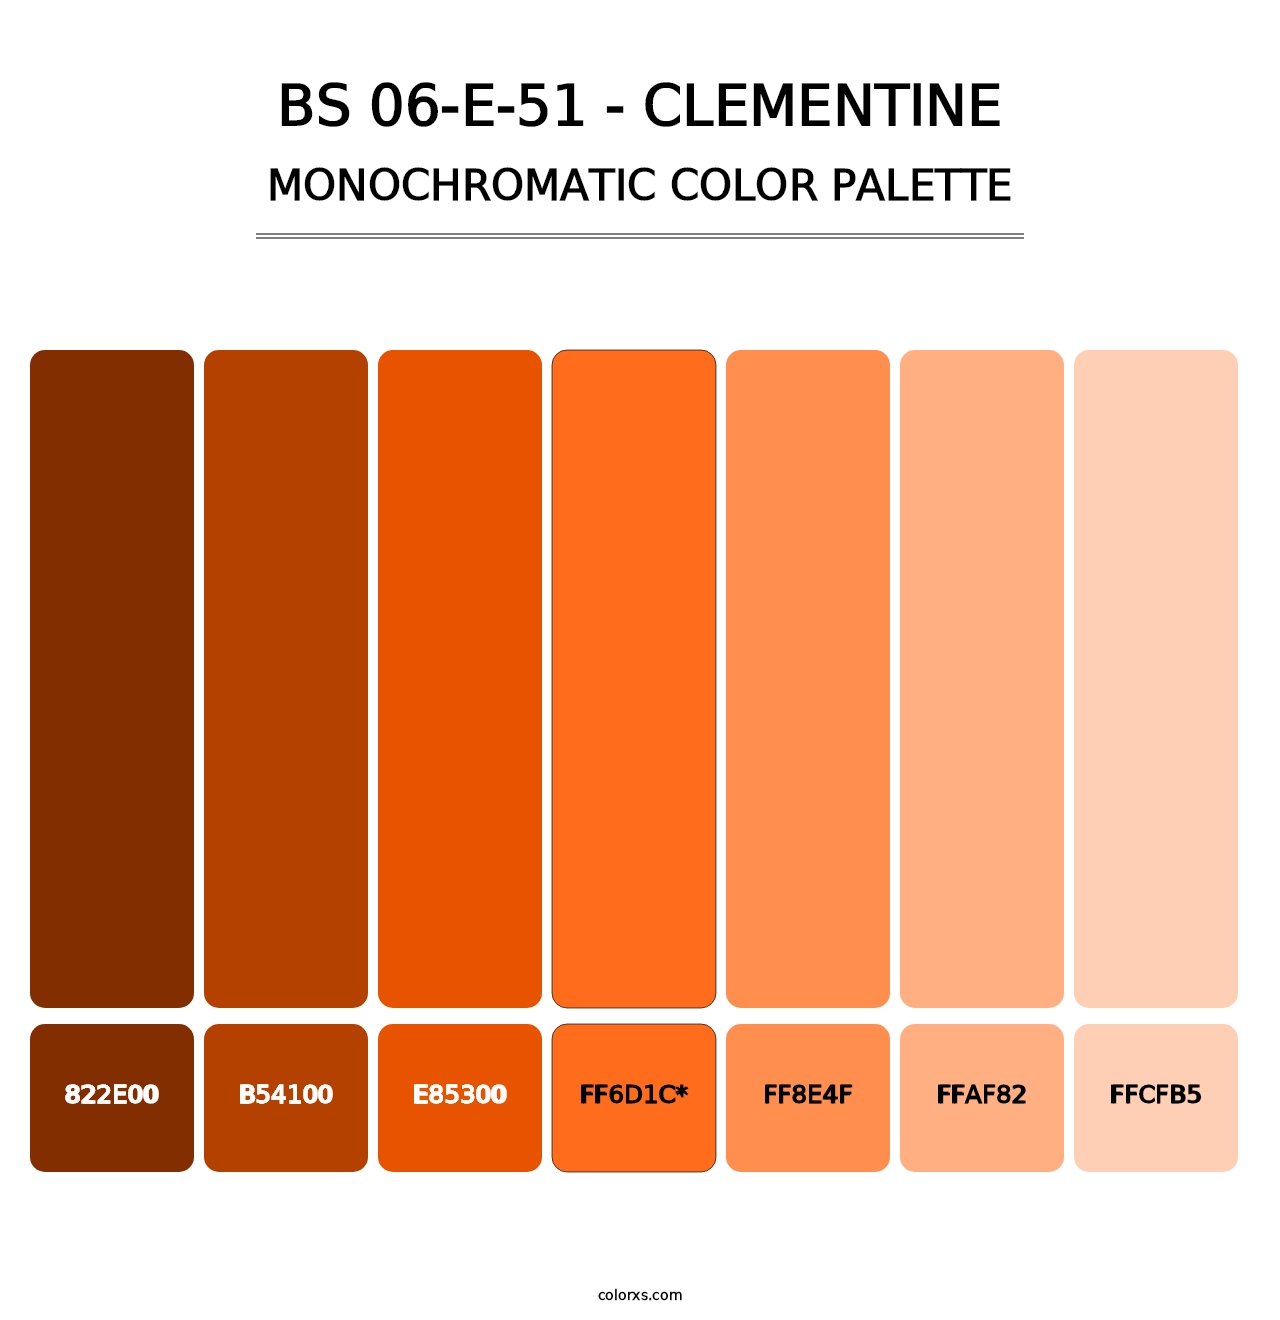 BS 06-E-51 - Clementine - Monochromatic Color Palette